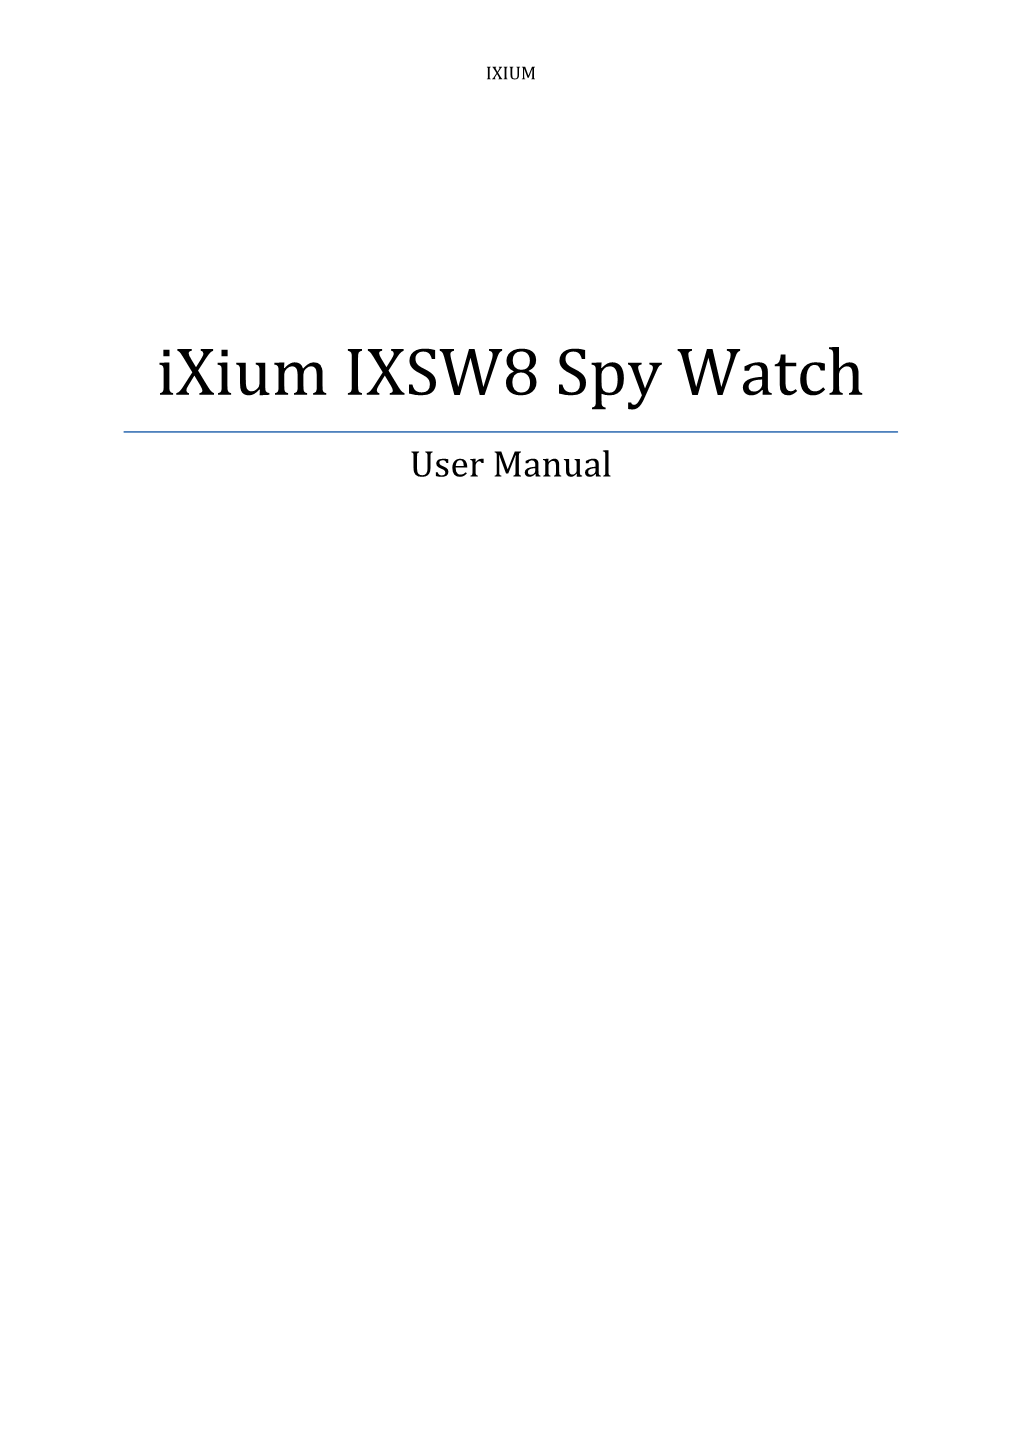 Ixium IXSW8 Spy Watch